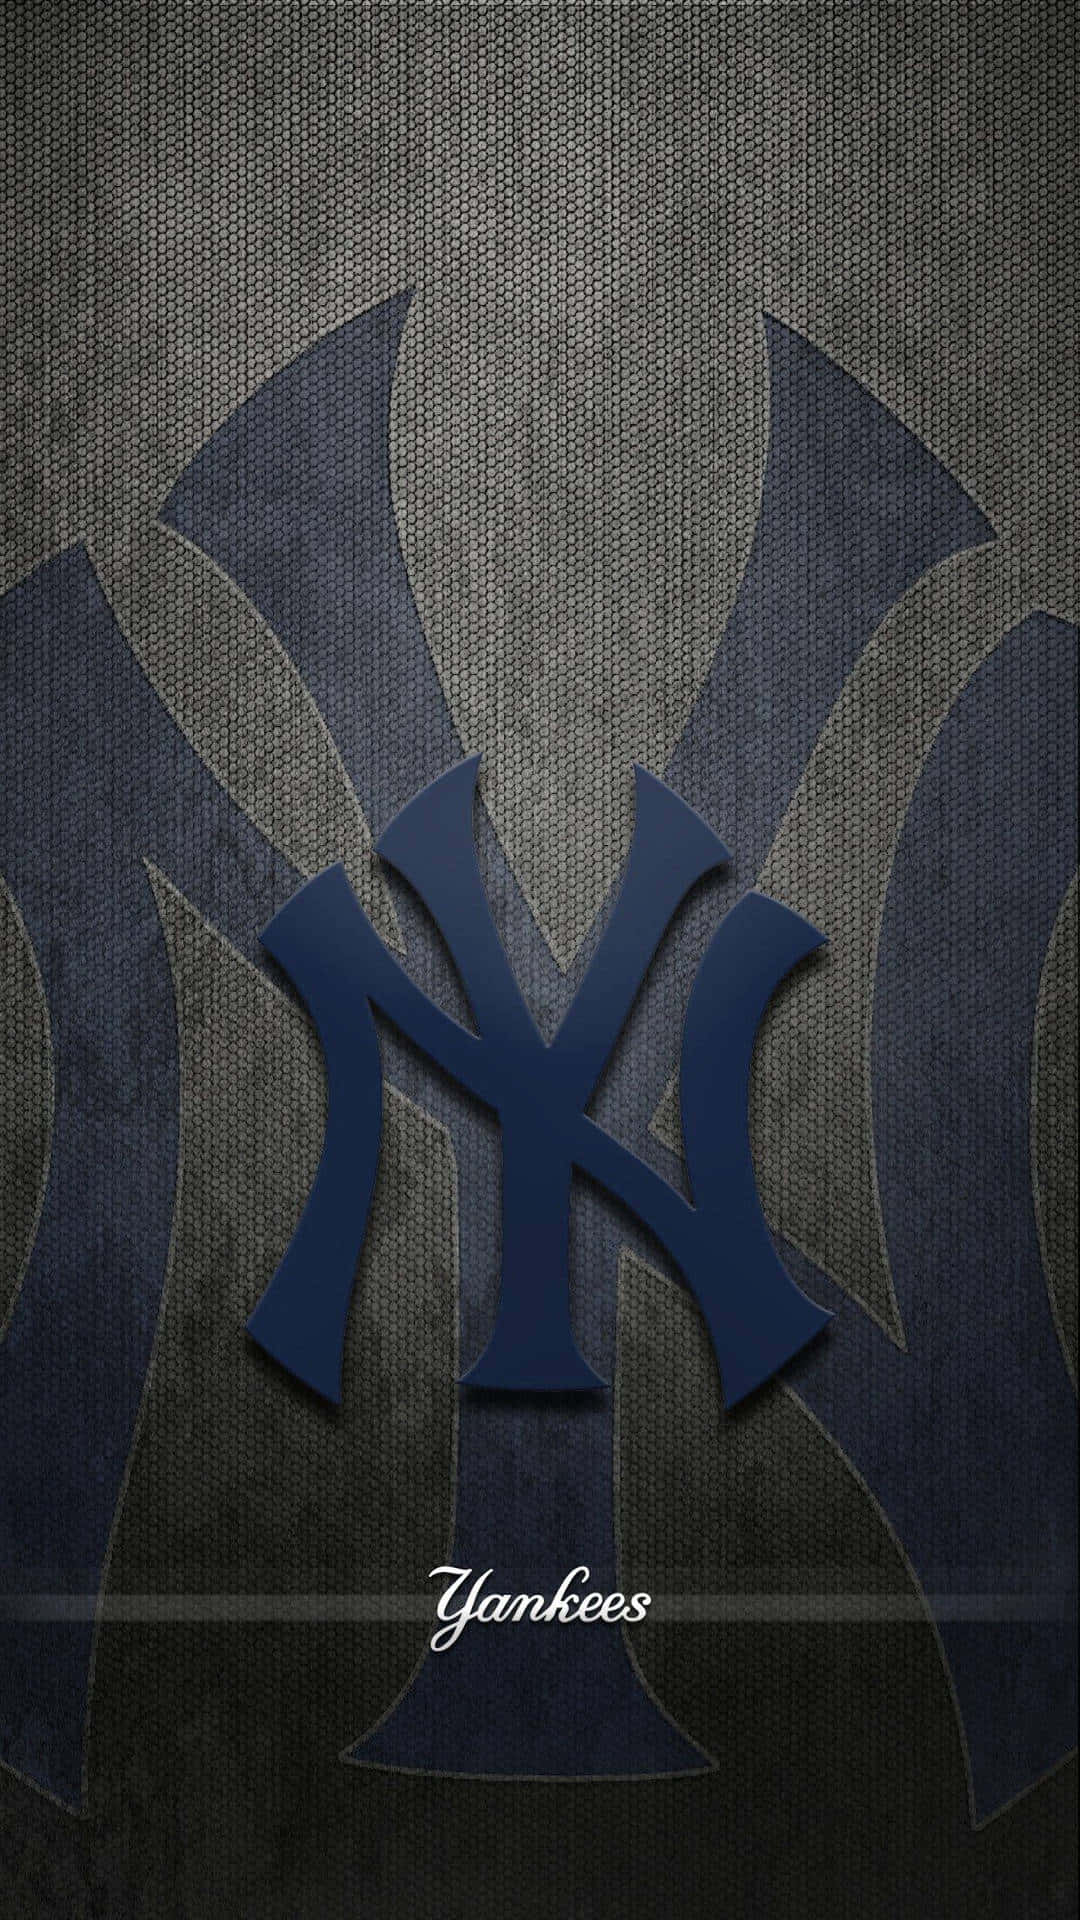 Download New York Yankees Home Field Wallpaper | Wallpapers.com